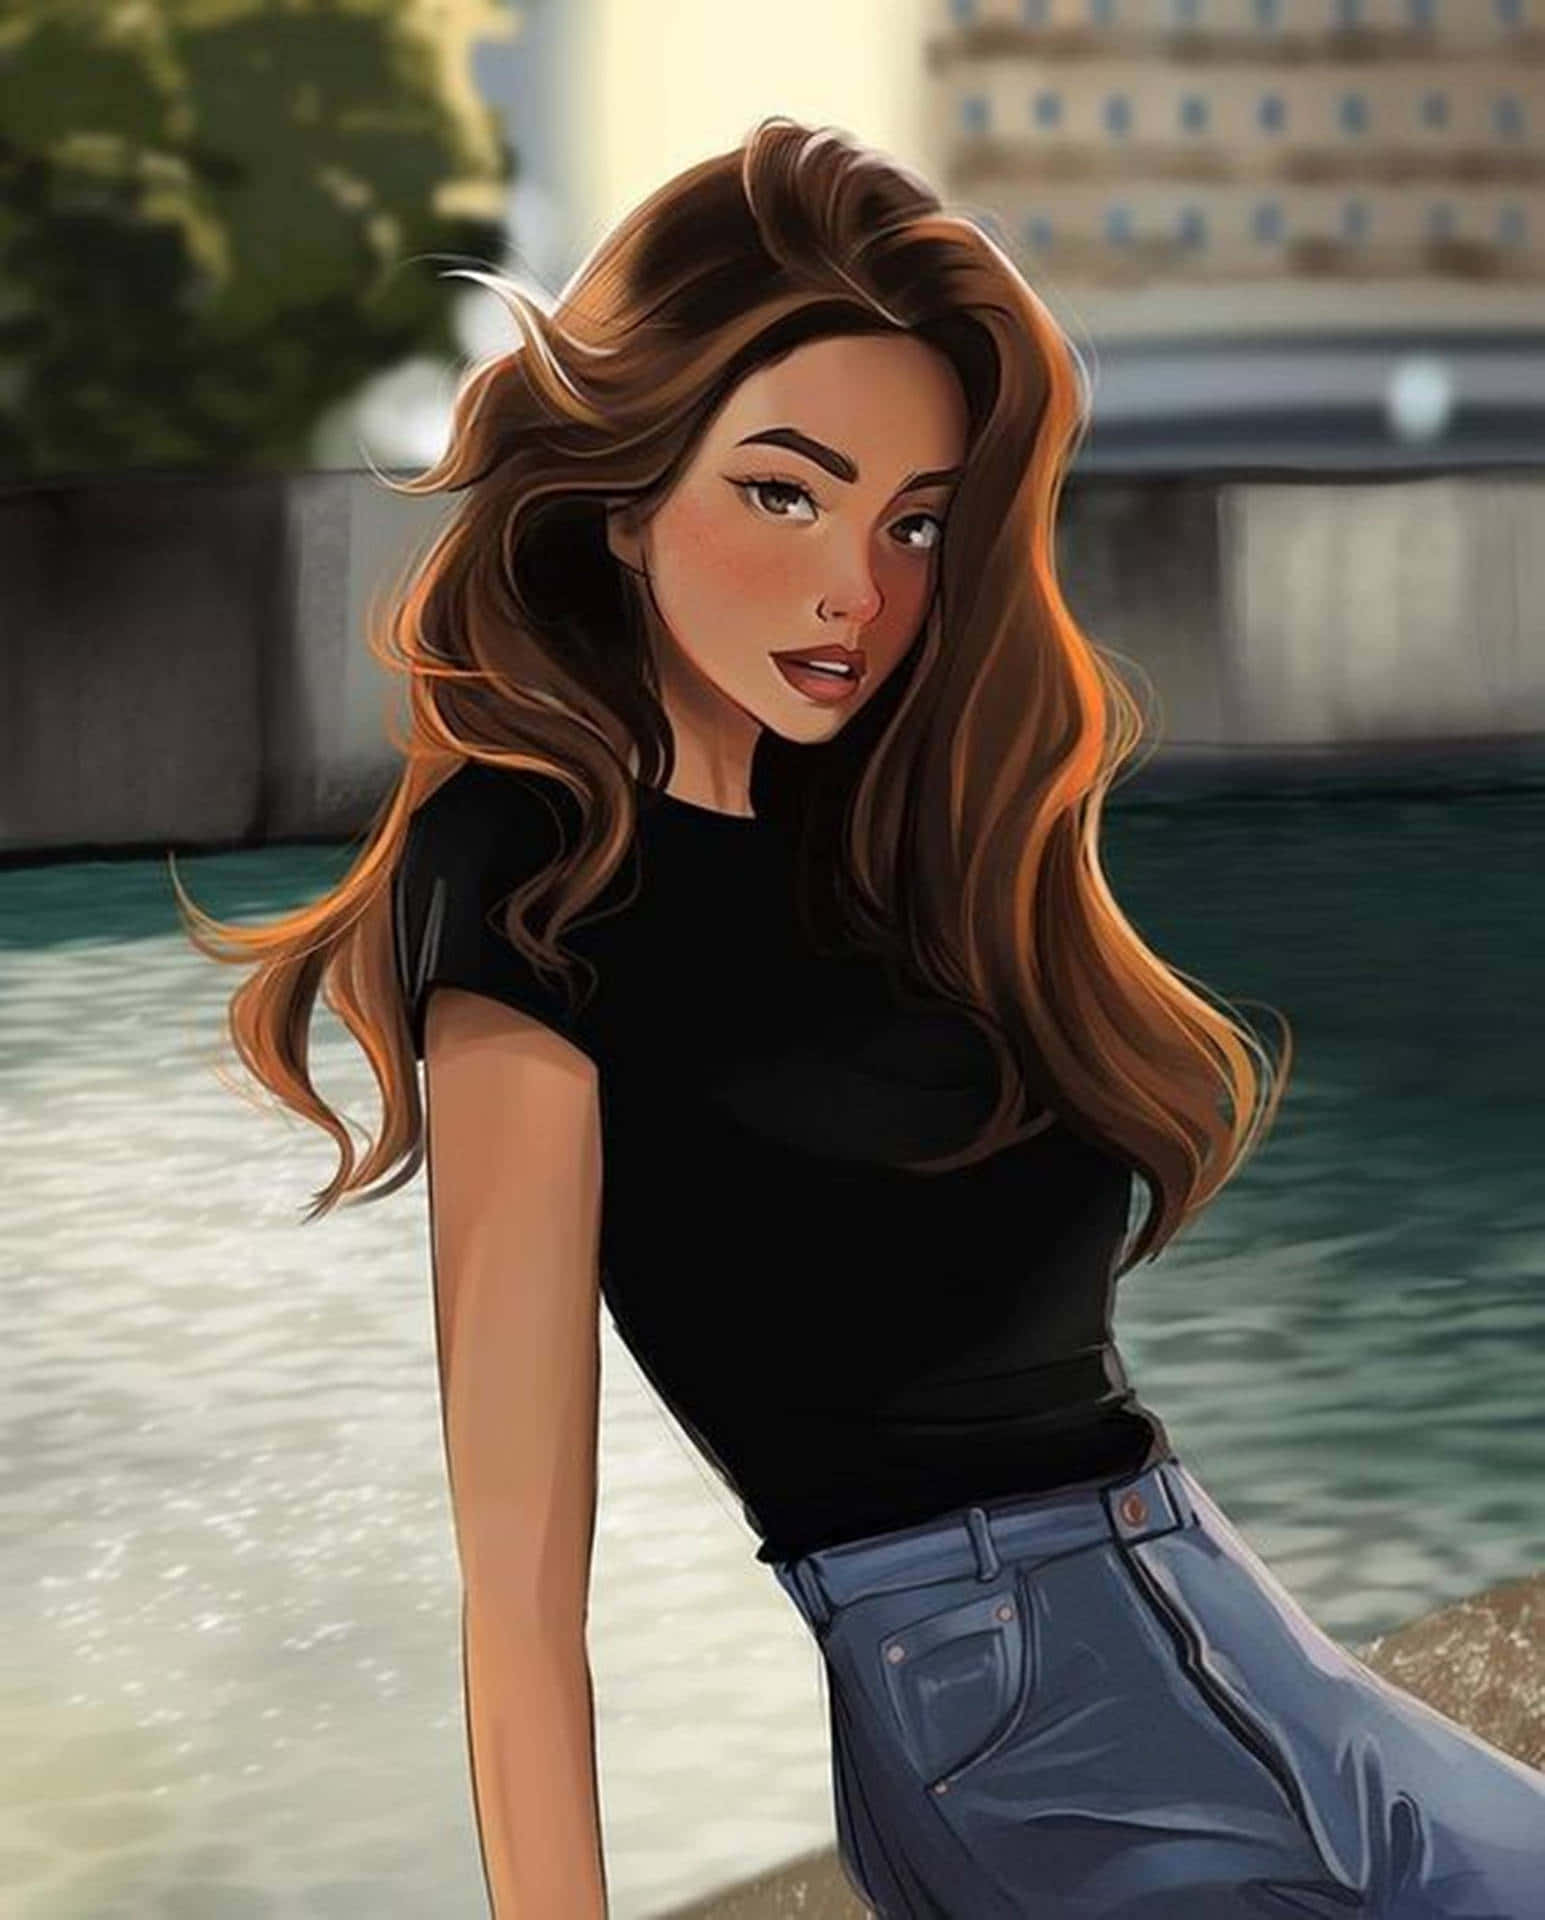 Mädchencartoon Profilbild Wallpaper